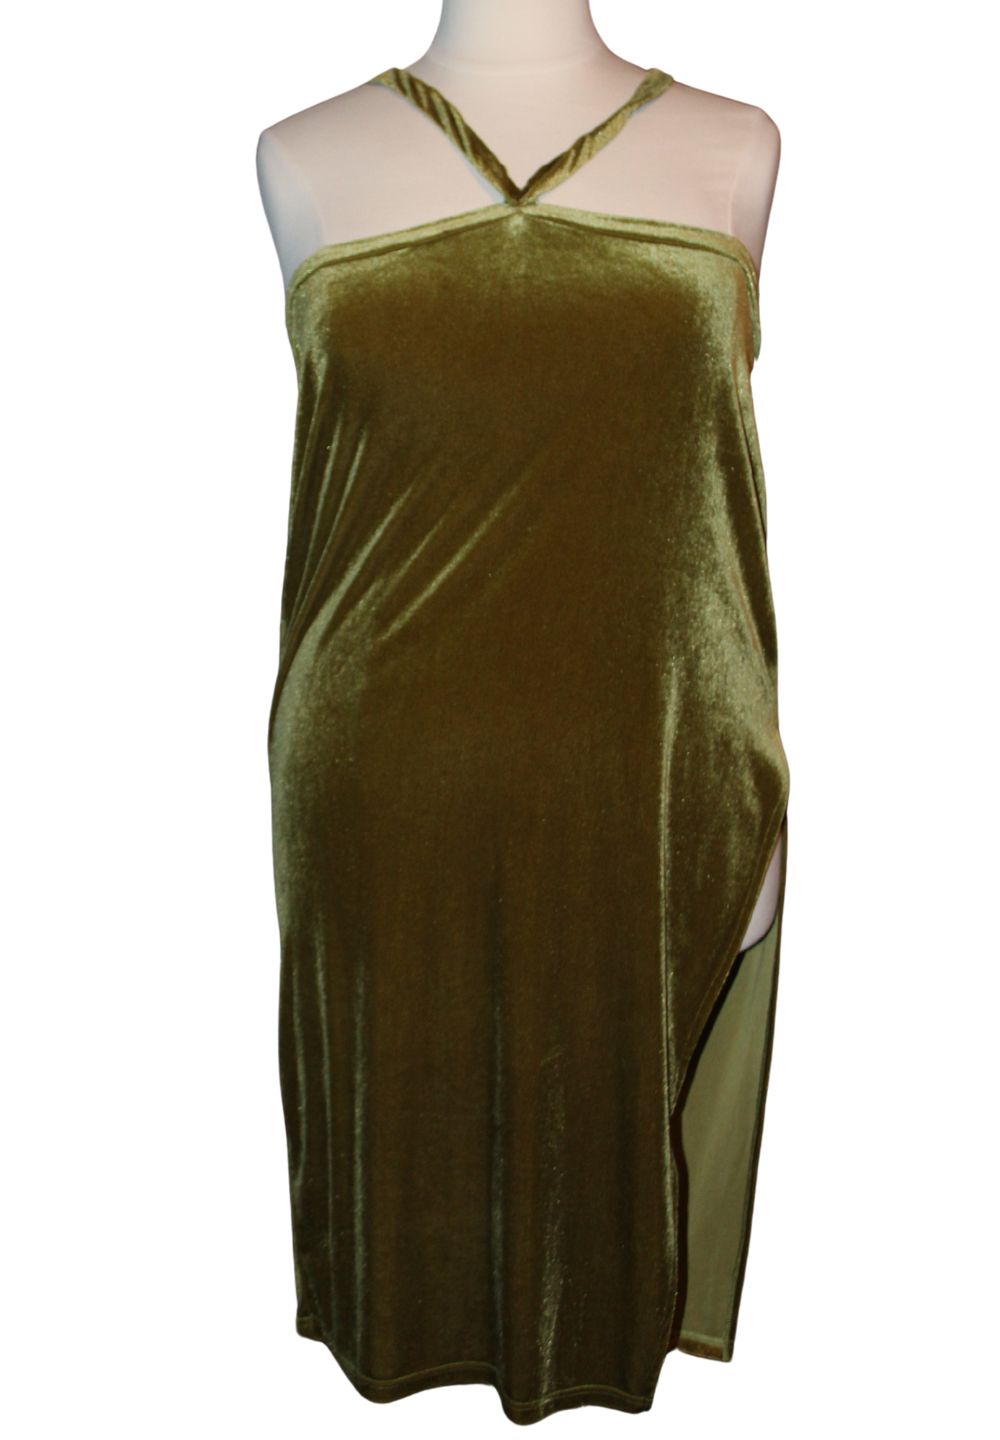 Shein Olive Green Velvet Dress, Size 4X